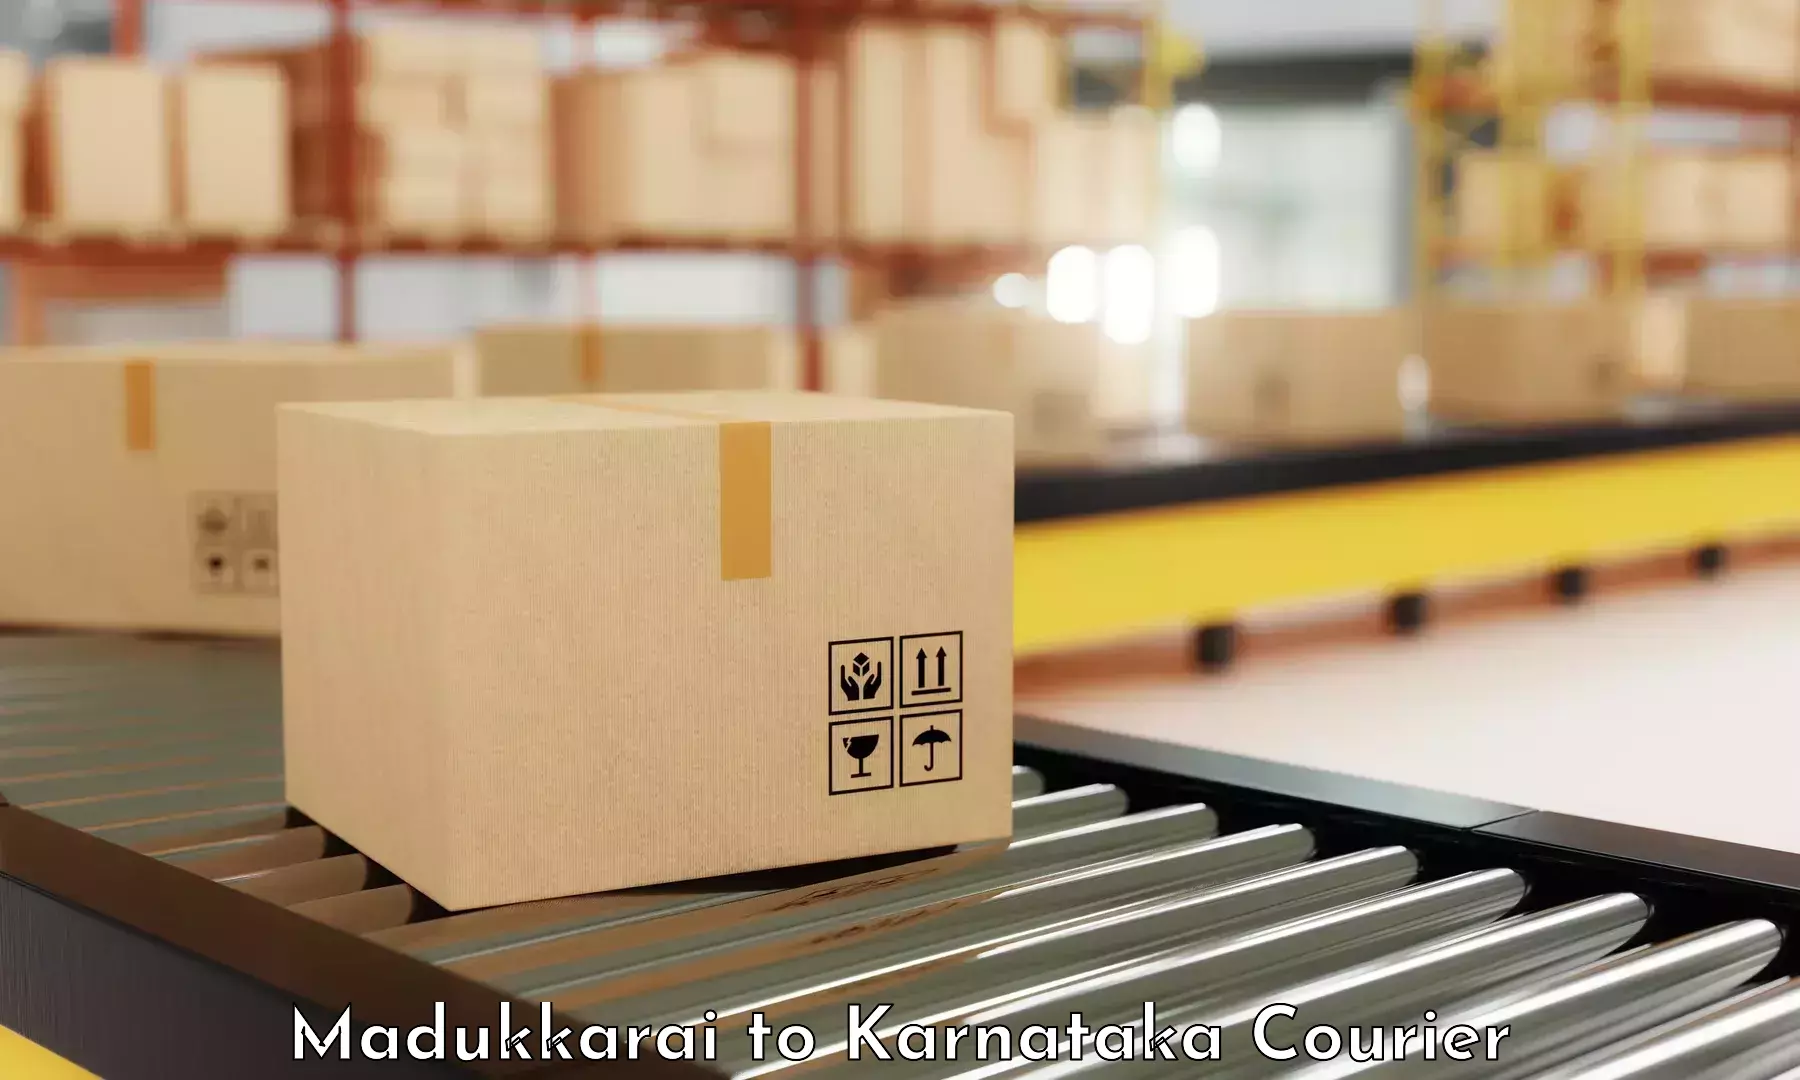 Nationwide delivery network Madukkarai to Karnataka